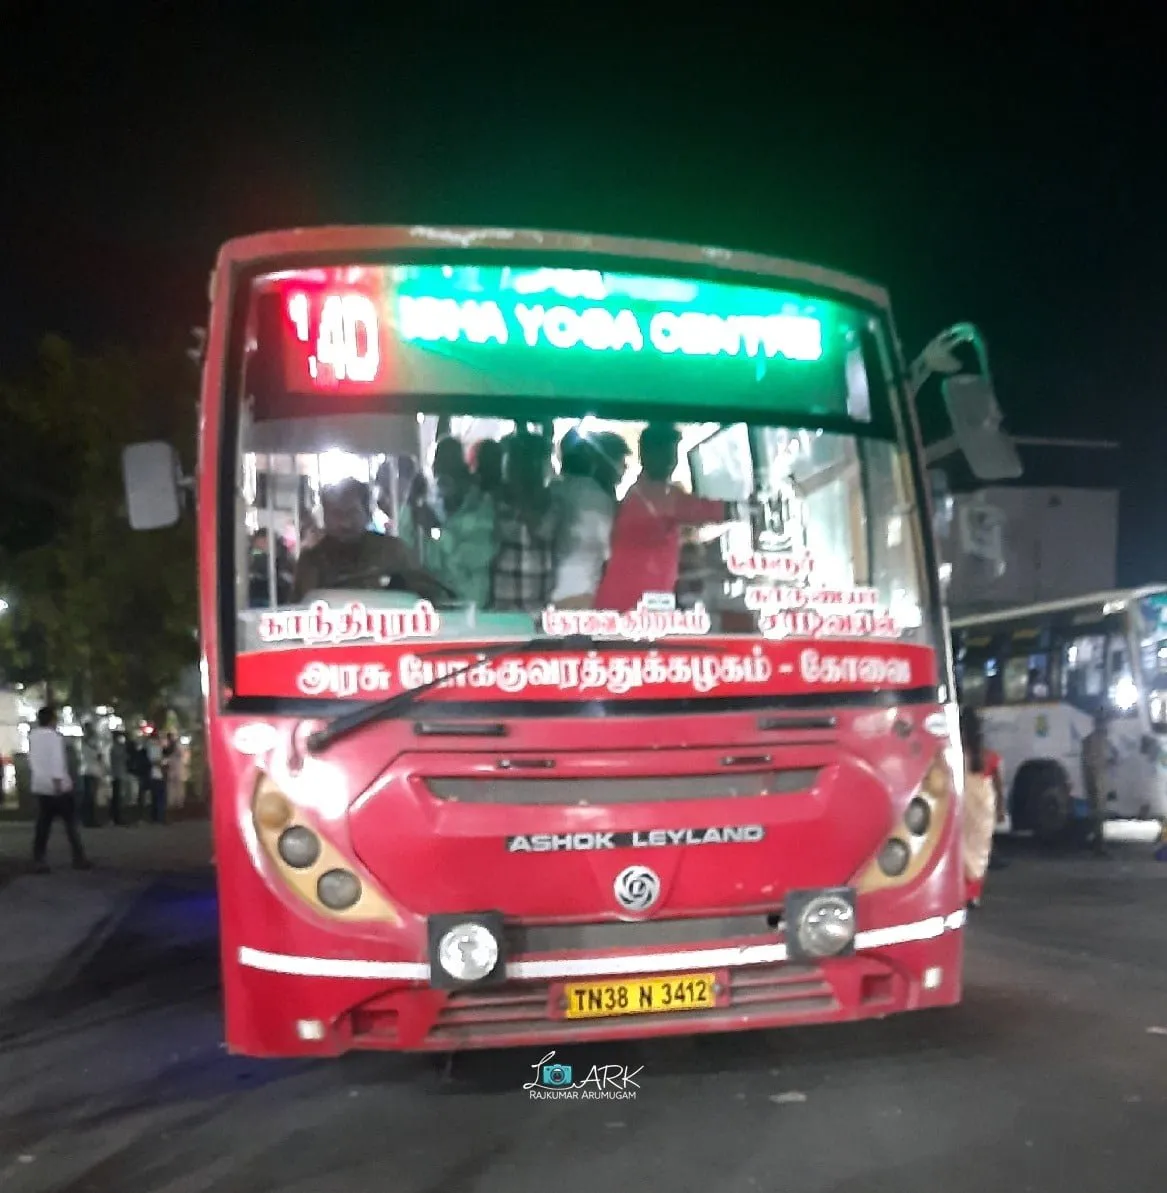 TNSTC TN 38 N 3412 Bus Route No 14D Gandhipuram - Isha Yoga Center Town Bus Timings